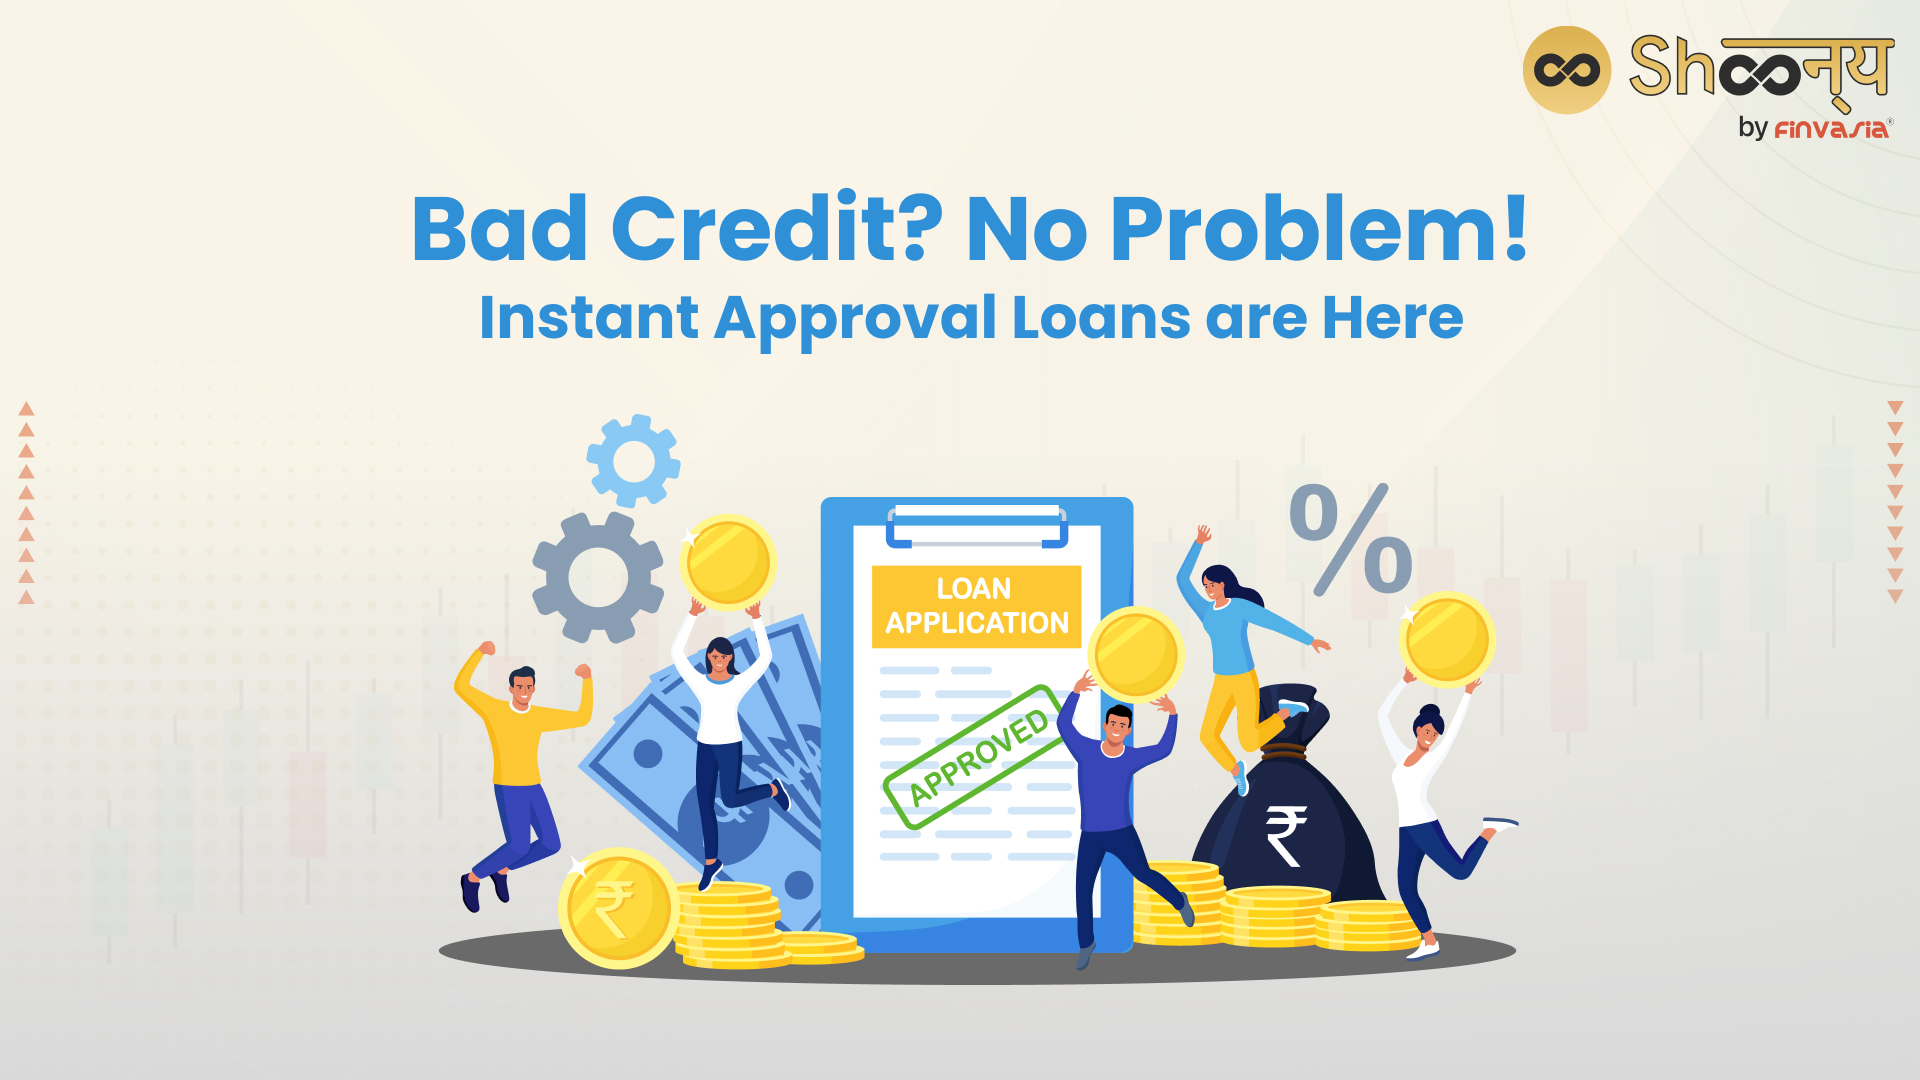 Should You Go for Bad Credit Instant Approval Loans?